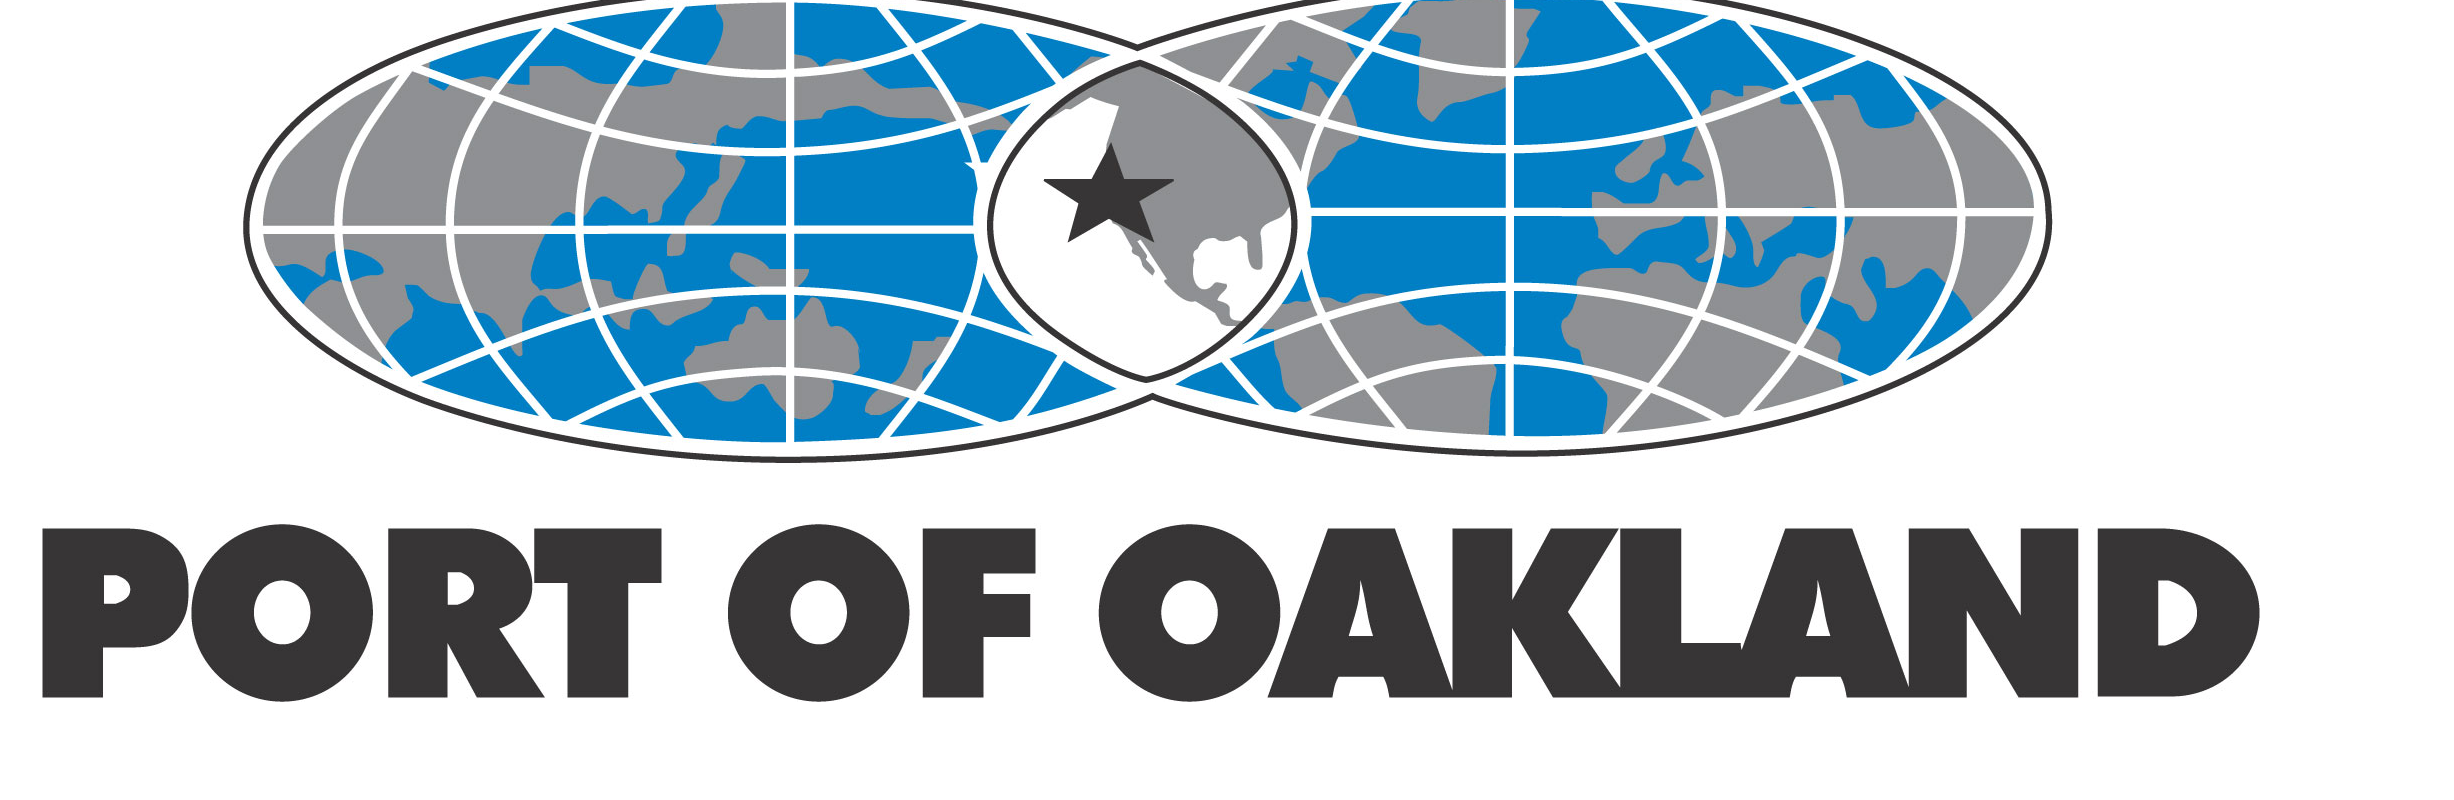 Port-of-Oakland-Logo copy.png